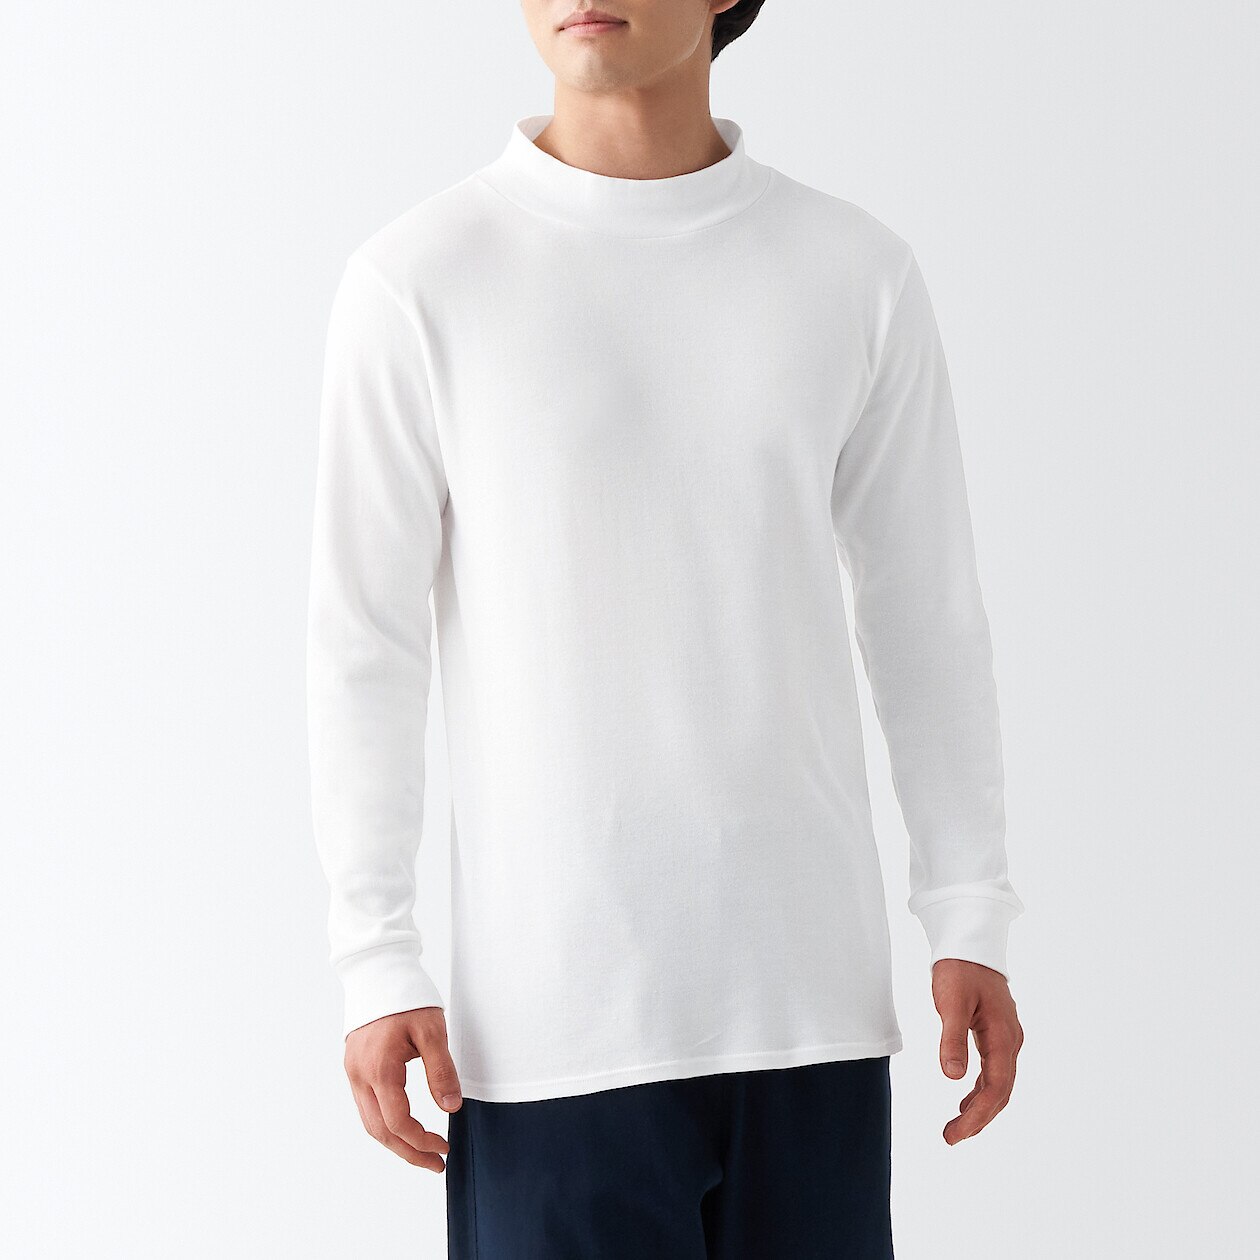 Men's Thick Cotton High Neck Long Sleeve T-shirt